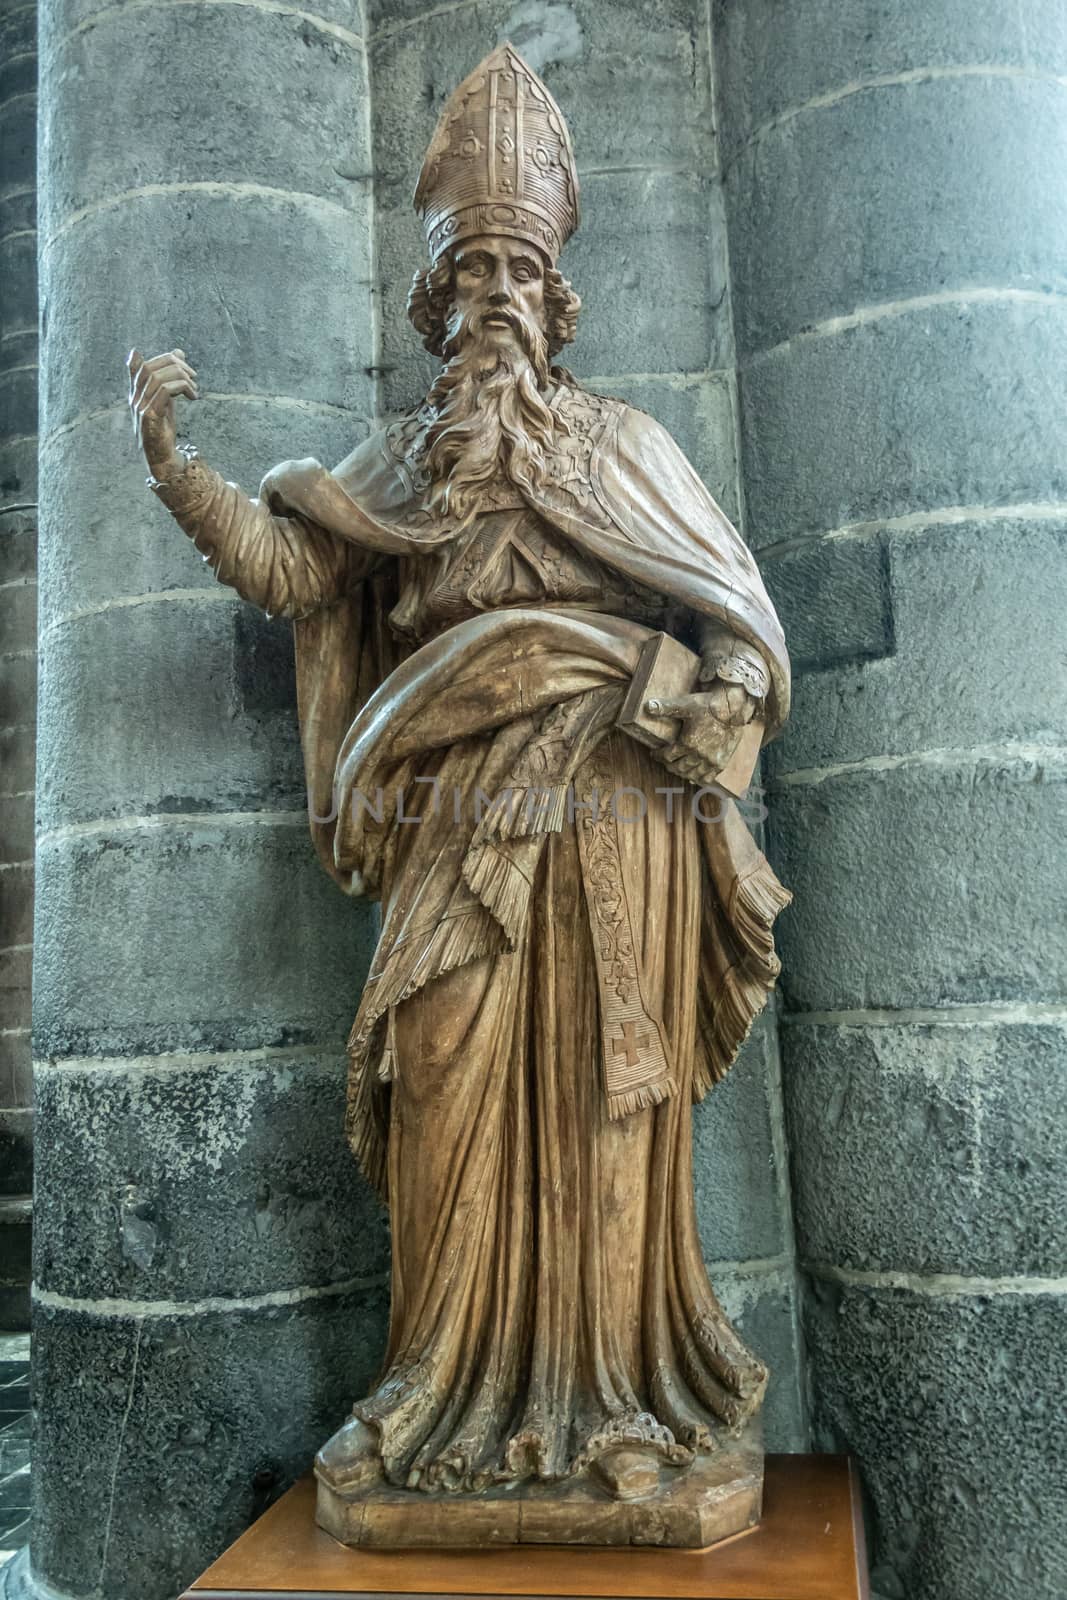 Dinant, Belgium - June 26, 2019: Inside Collégiale Notre Dame de Dinant Church. Brown painted stone statue of Belgian medieval Saint Hubert against pillar..